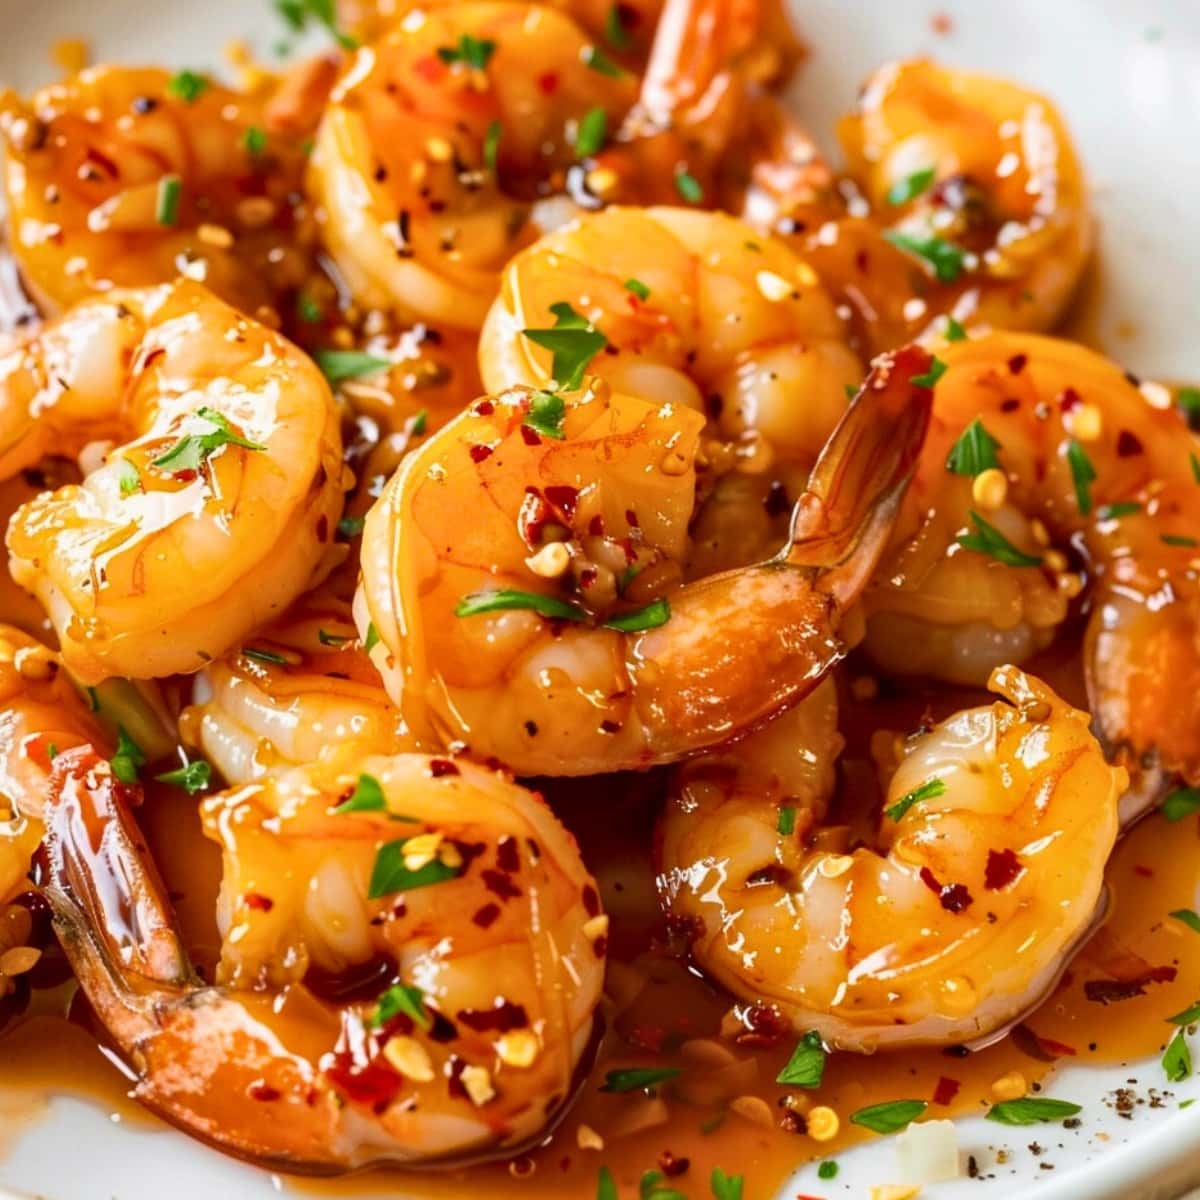 Shrimp in honey garlic sauce seasoned with pepper flakes.